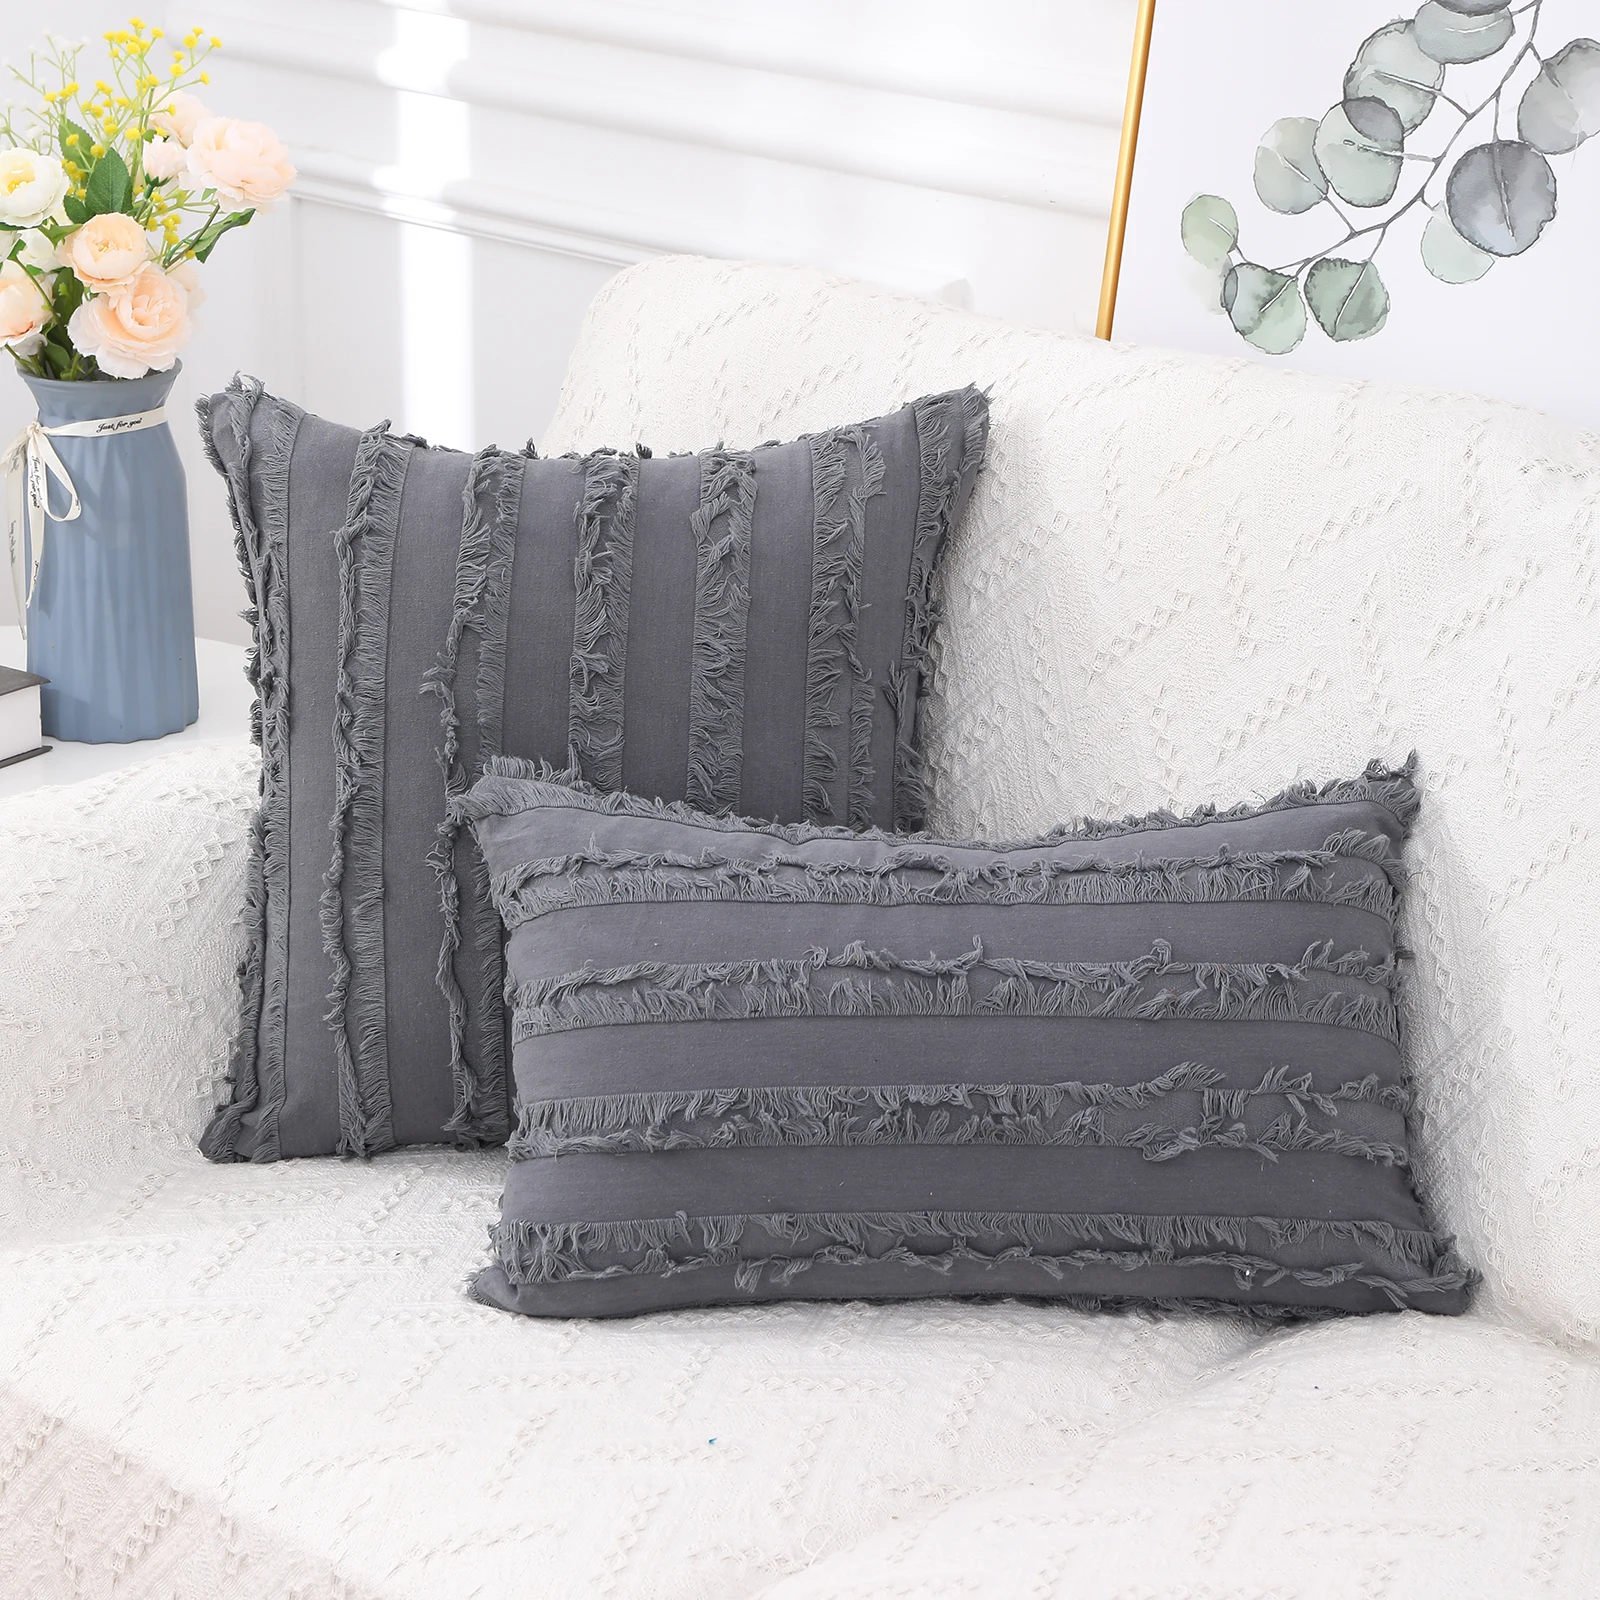 Olanly Decorative Throw Pillow Case For Sofa Bed Car 1Pc Furry Cushion Cover Striped Sleeping Pillowcase Aesthetic Cotton Linen